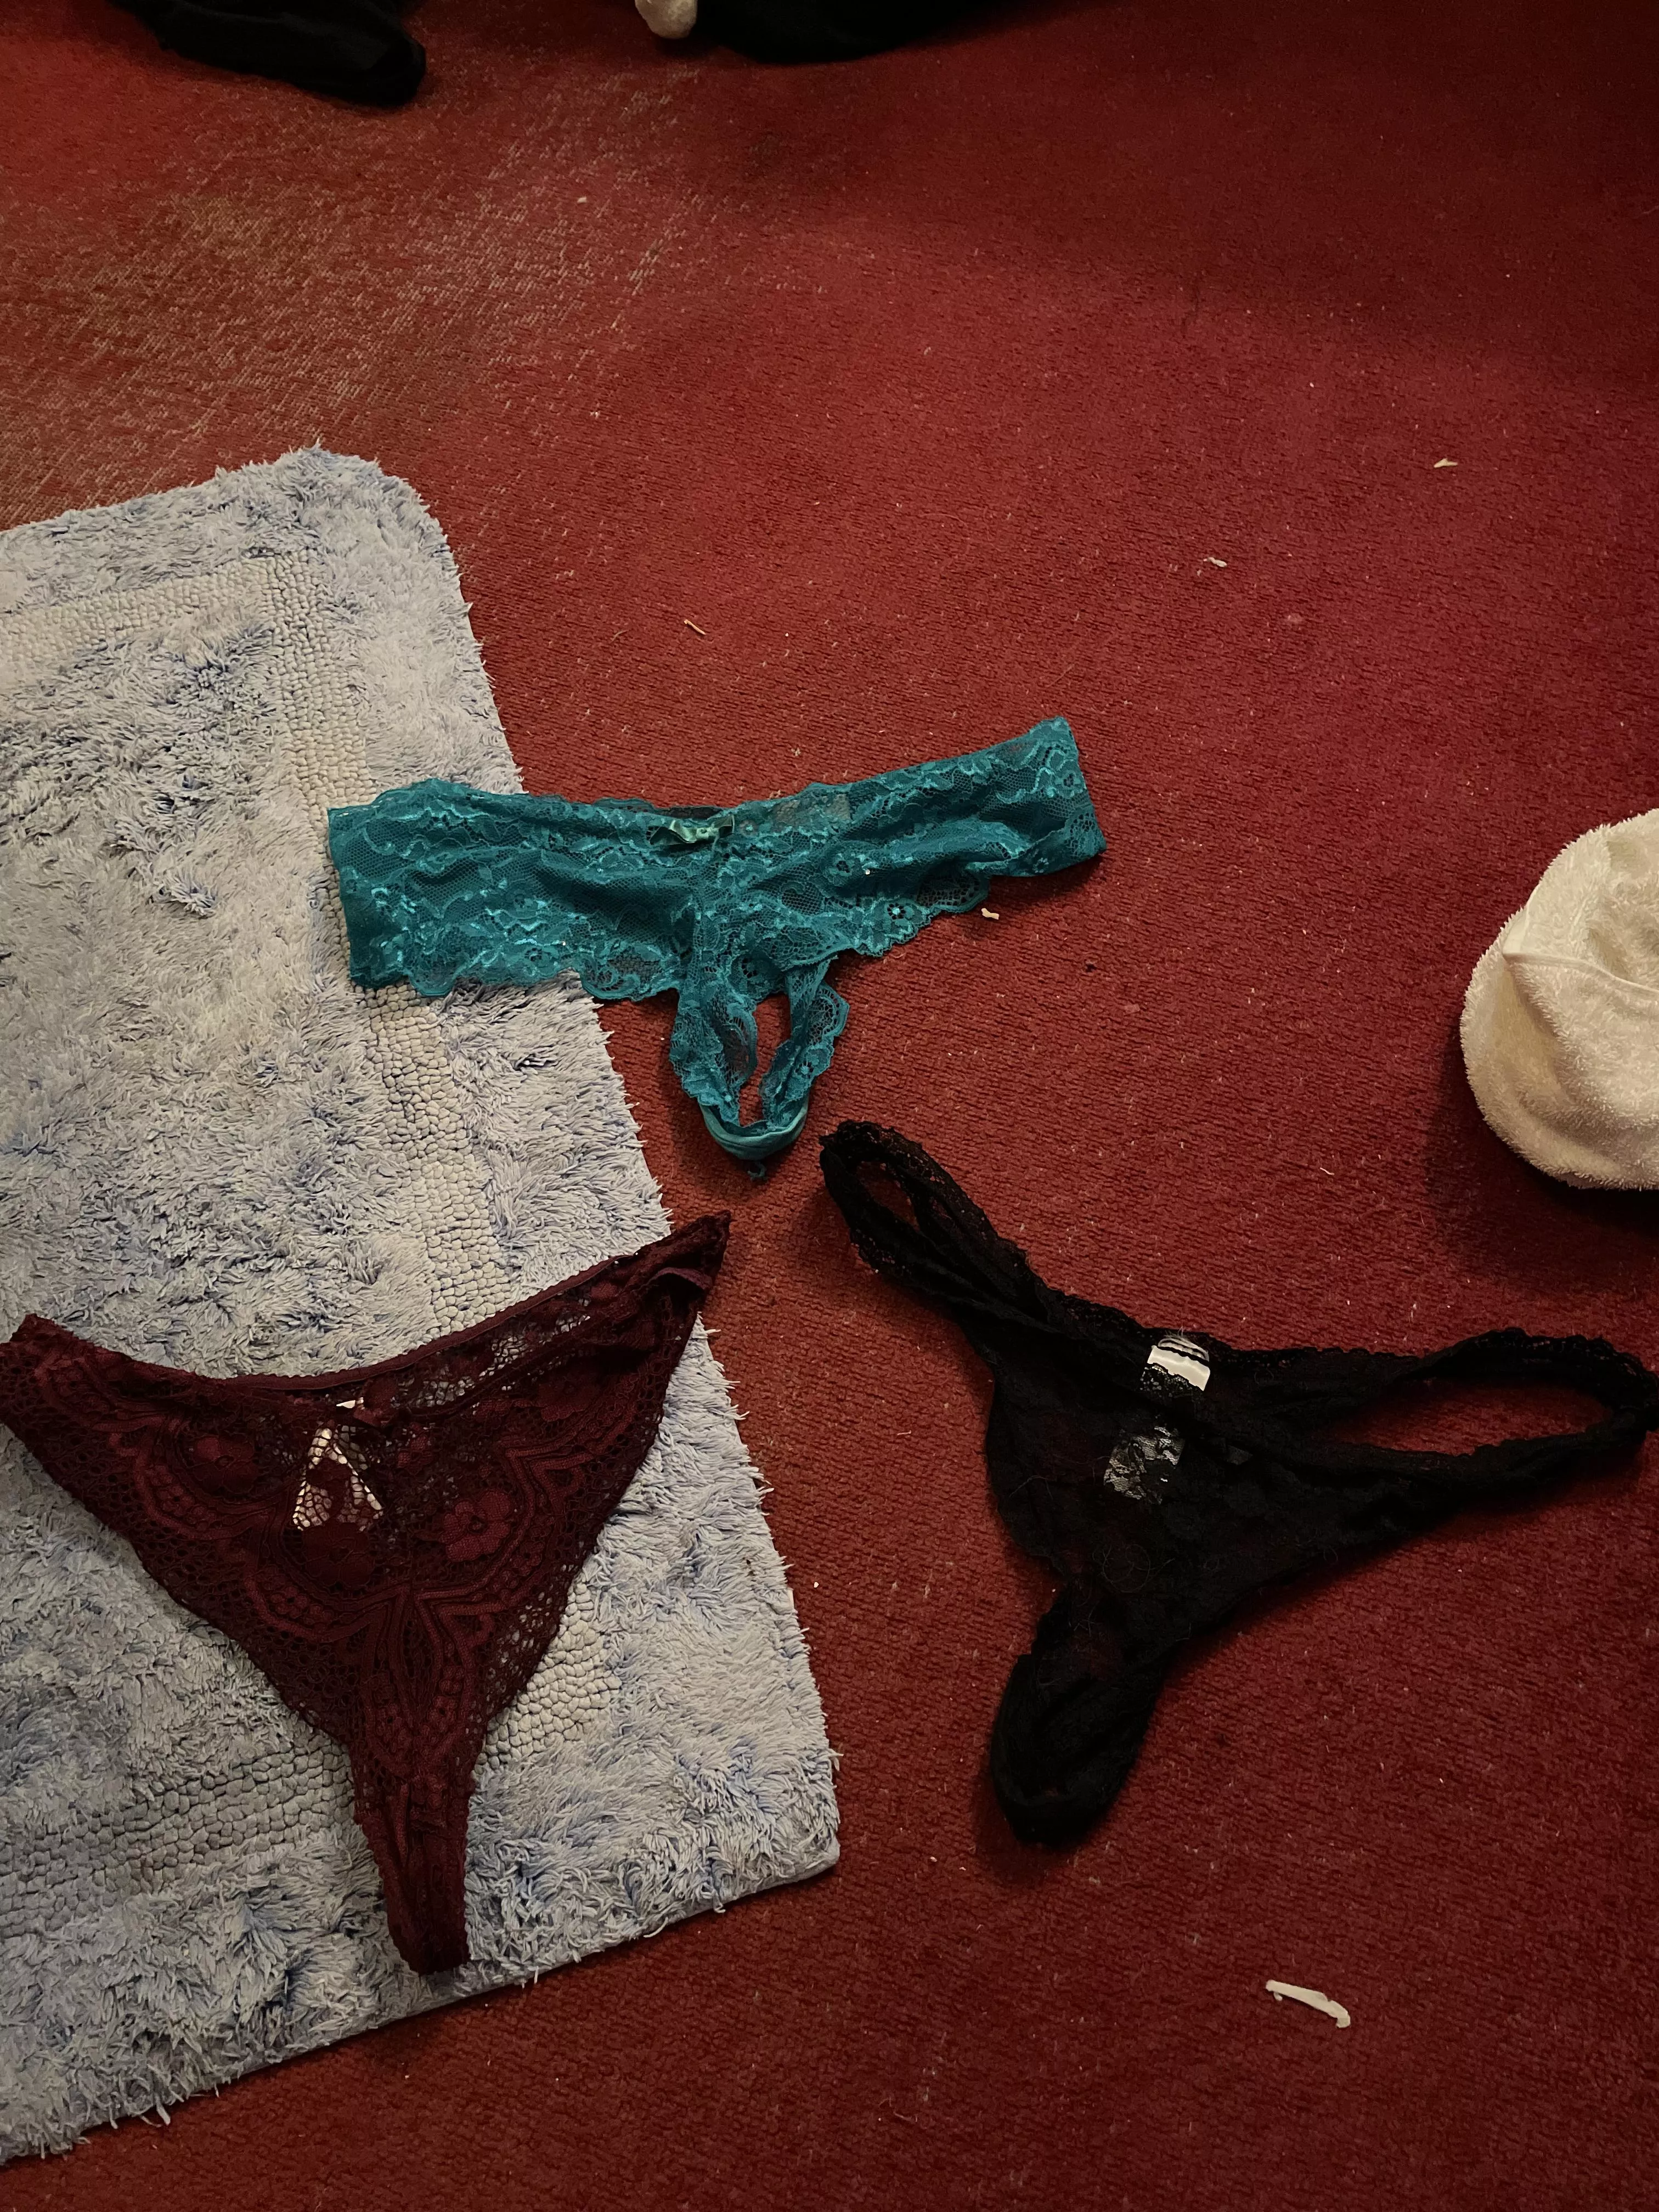 3 Days Of Used Panties In The Hamper Hmu To See More Nudes